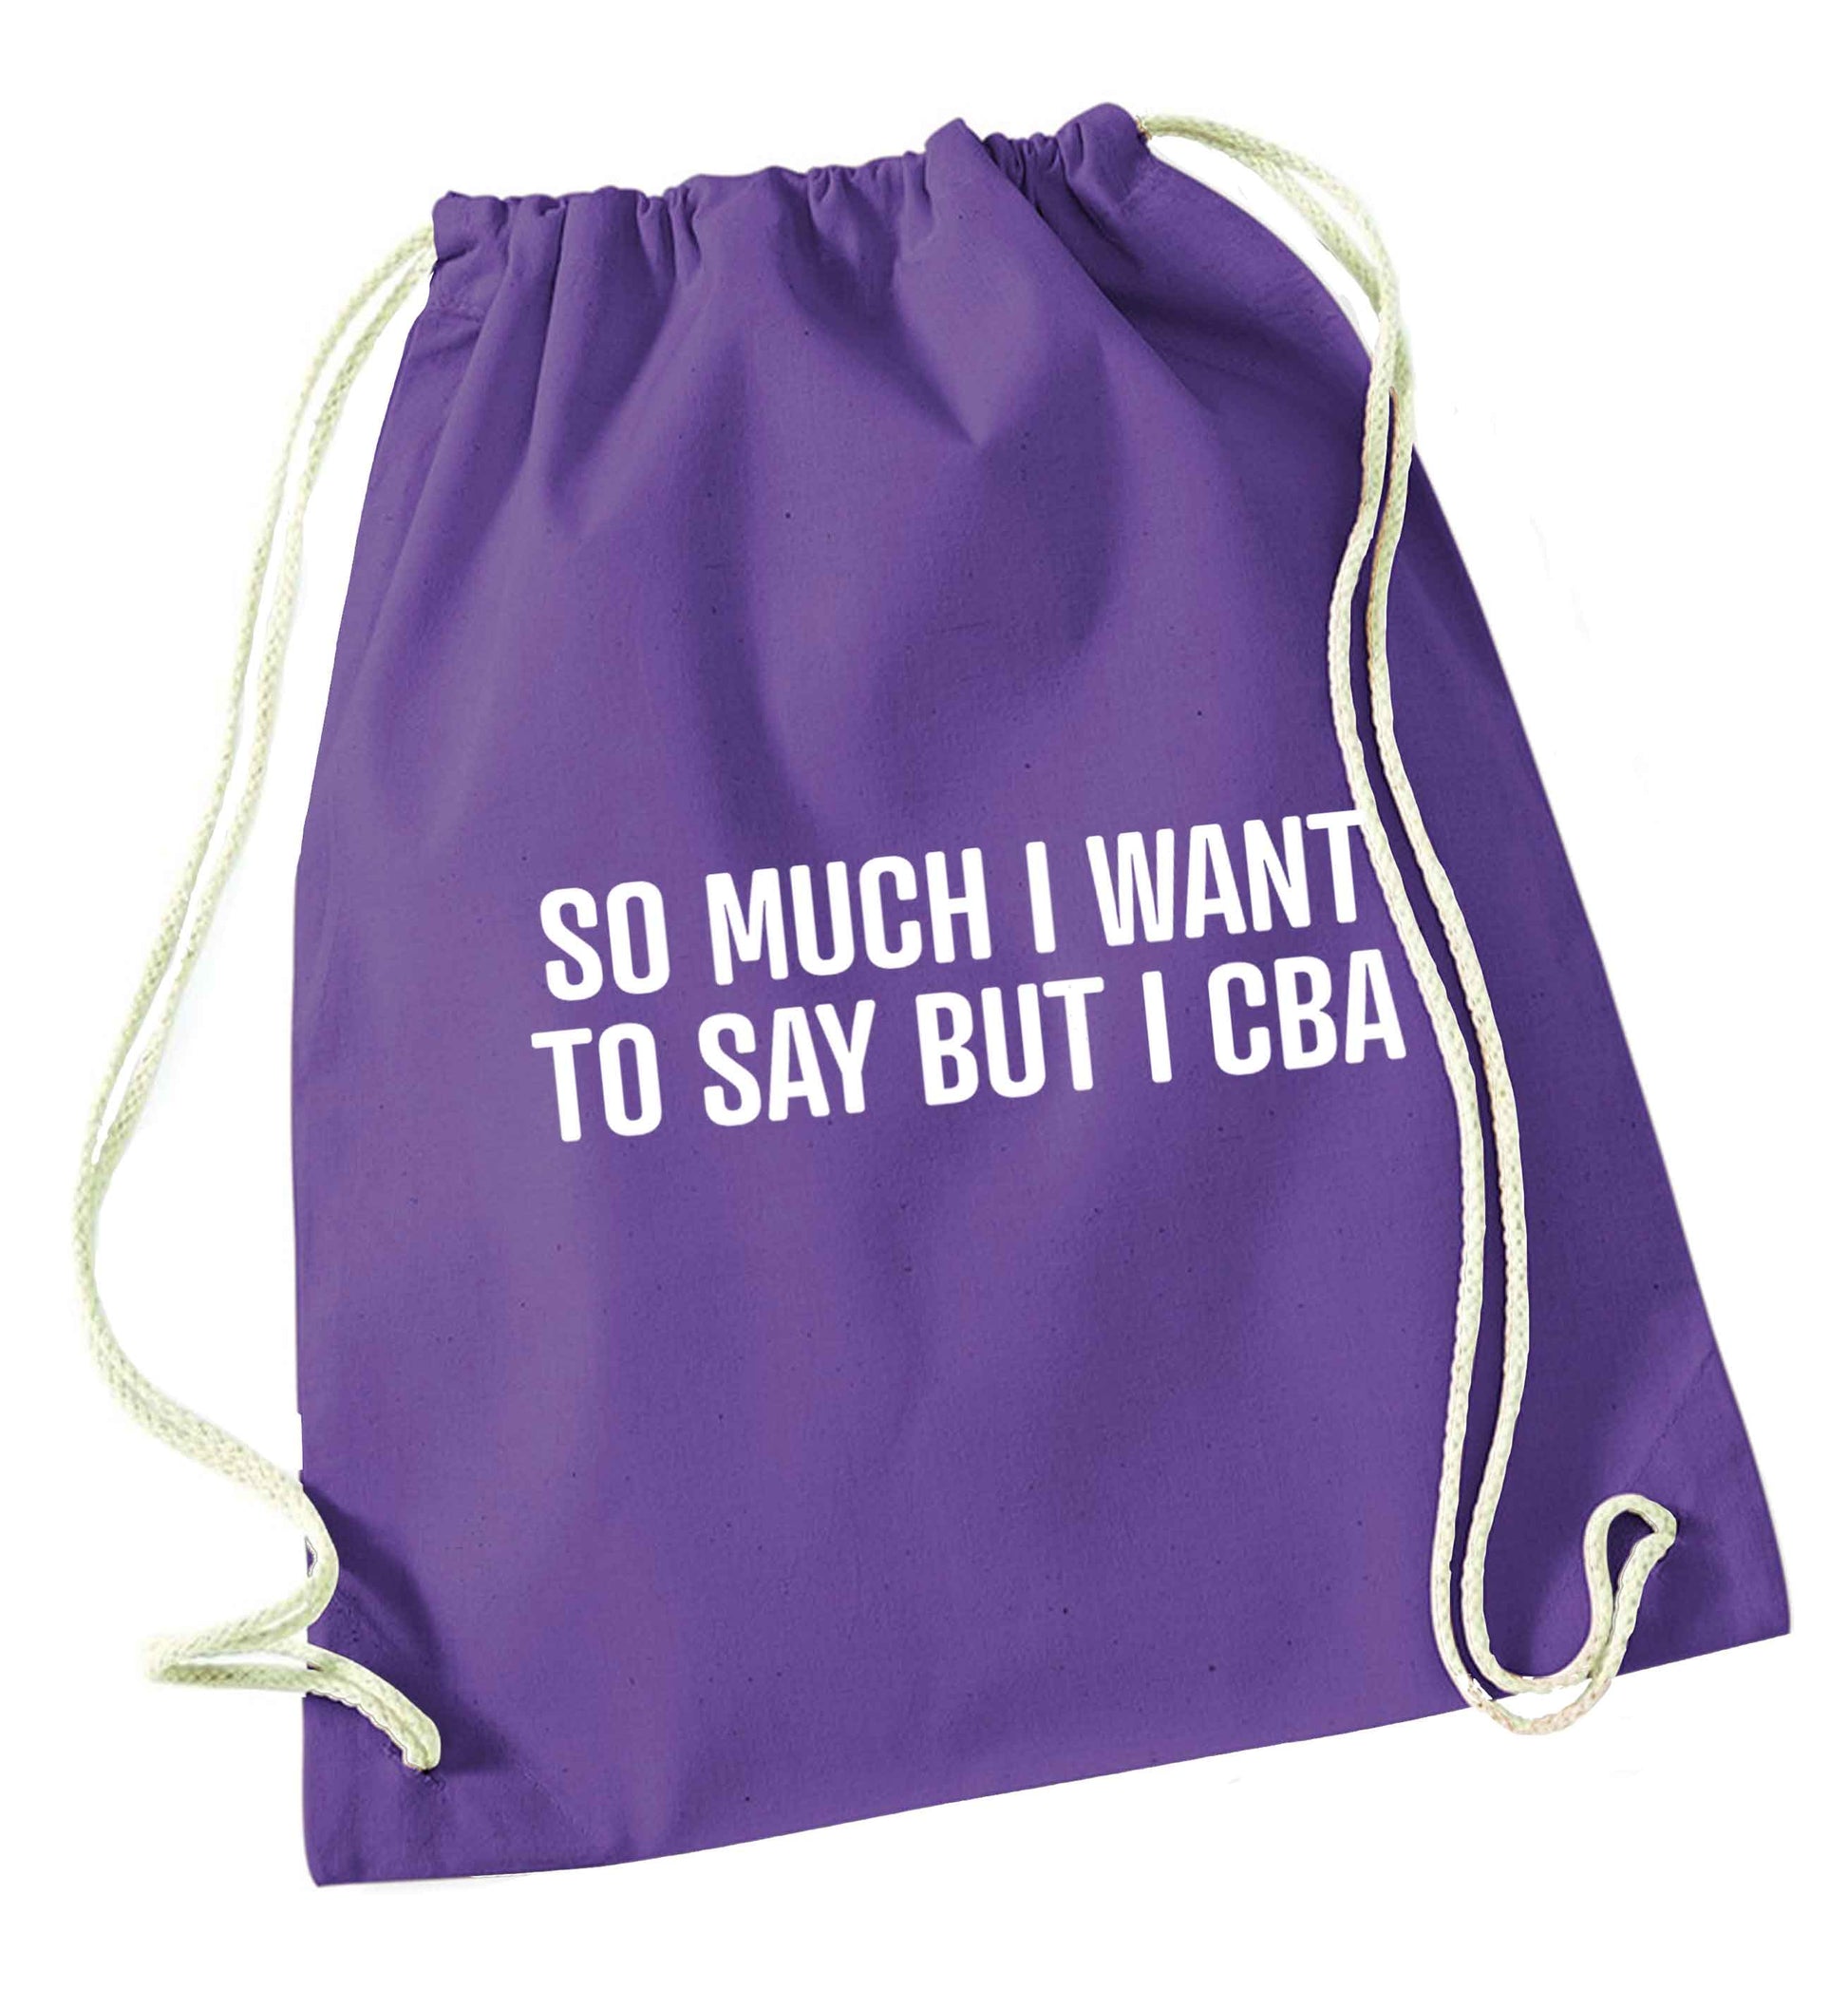 So much I want to say I cba  purple drawstring bag